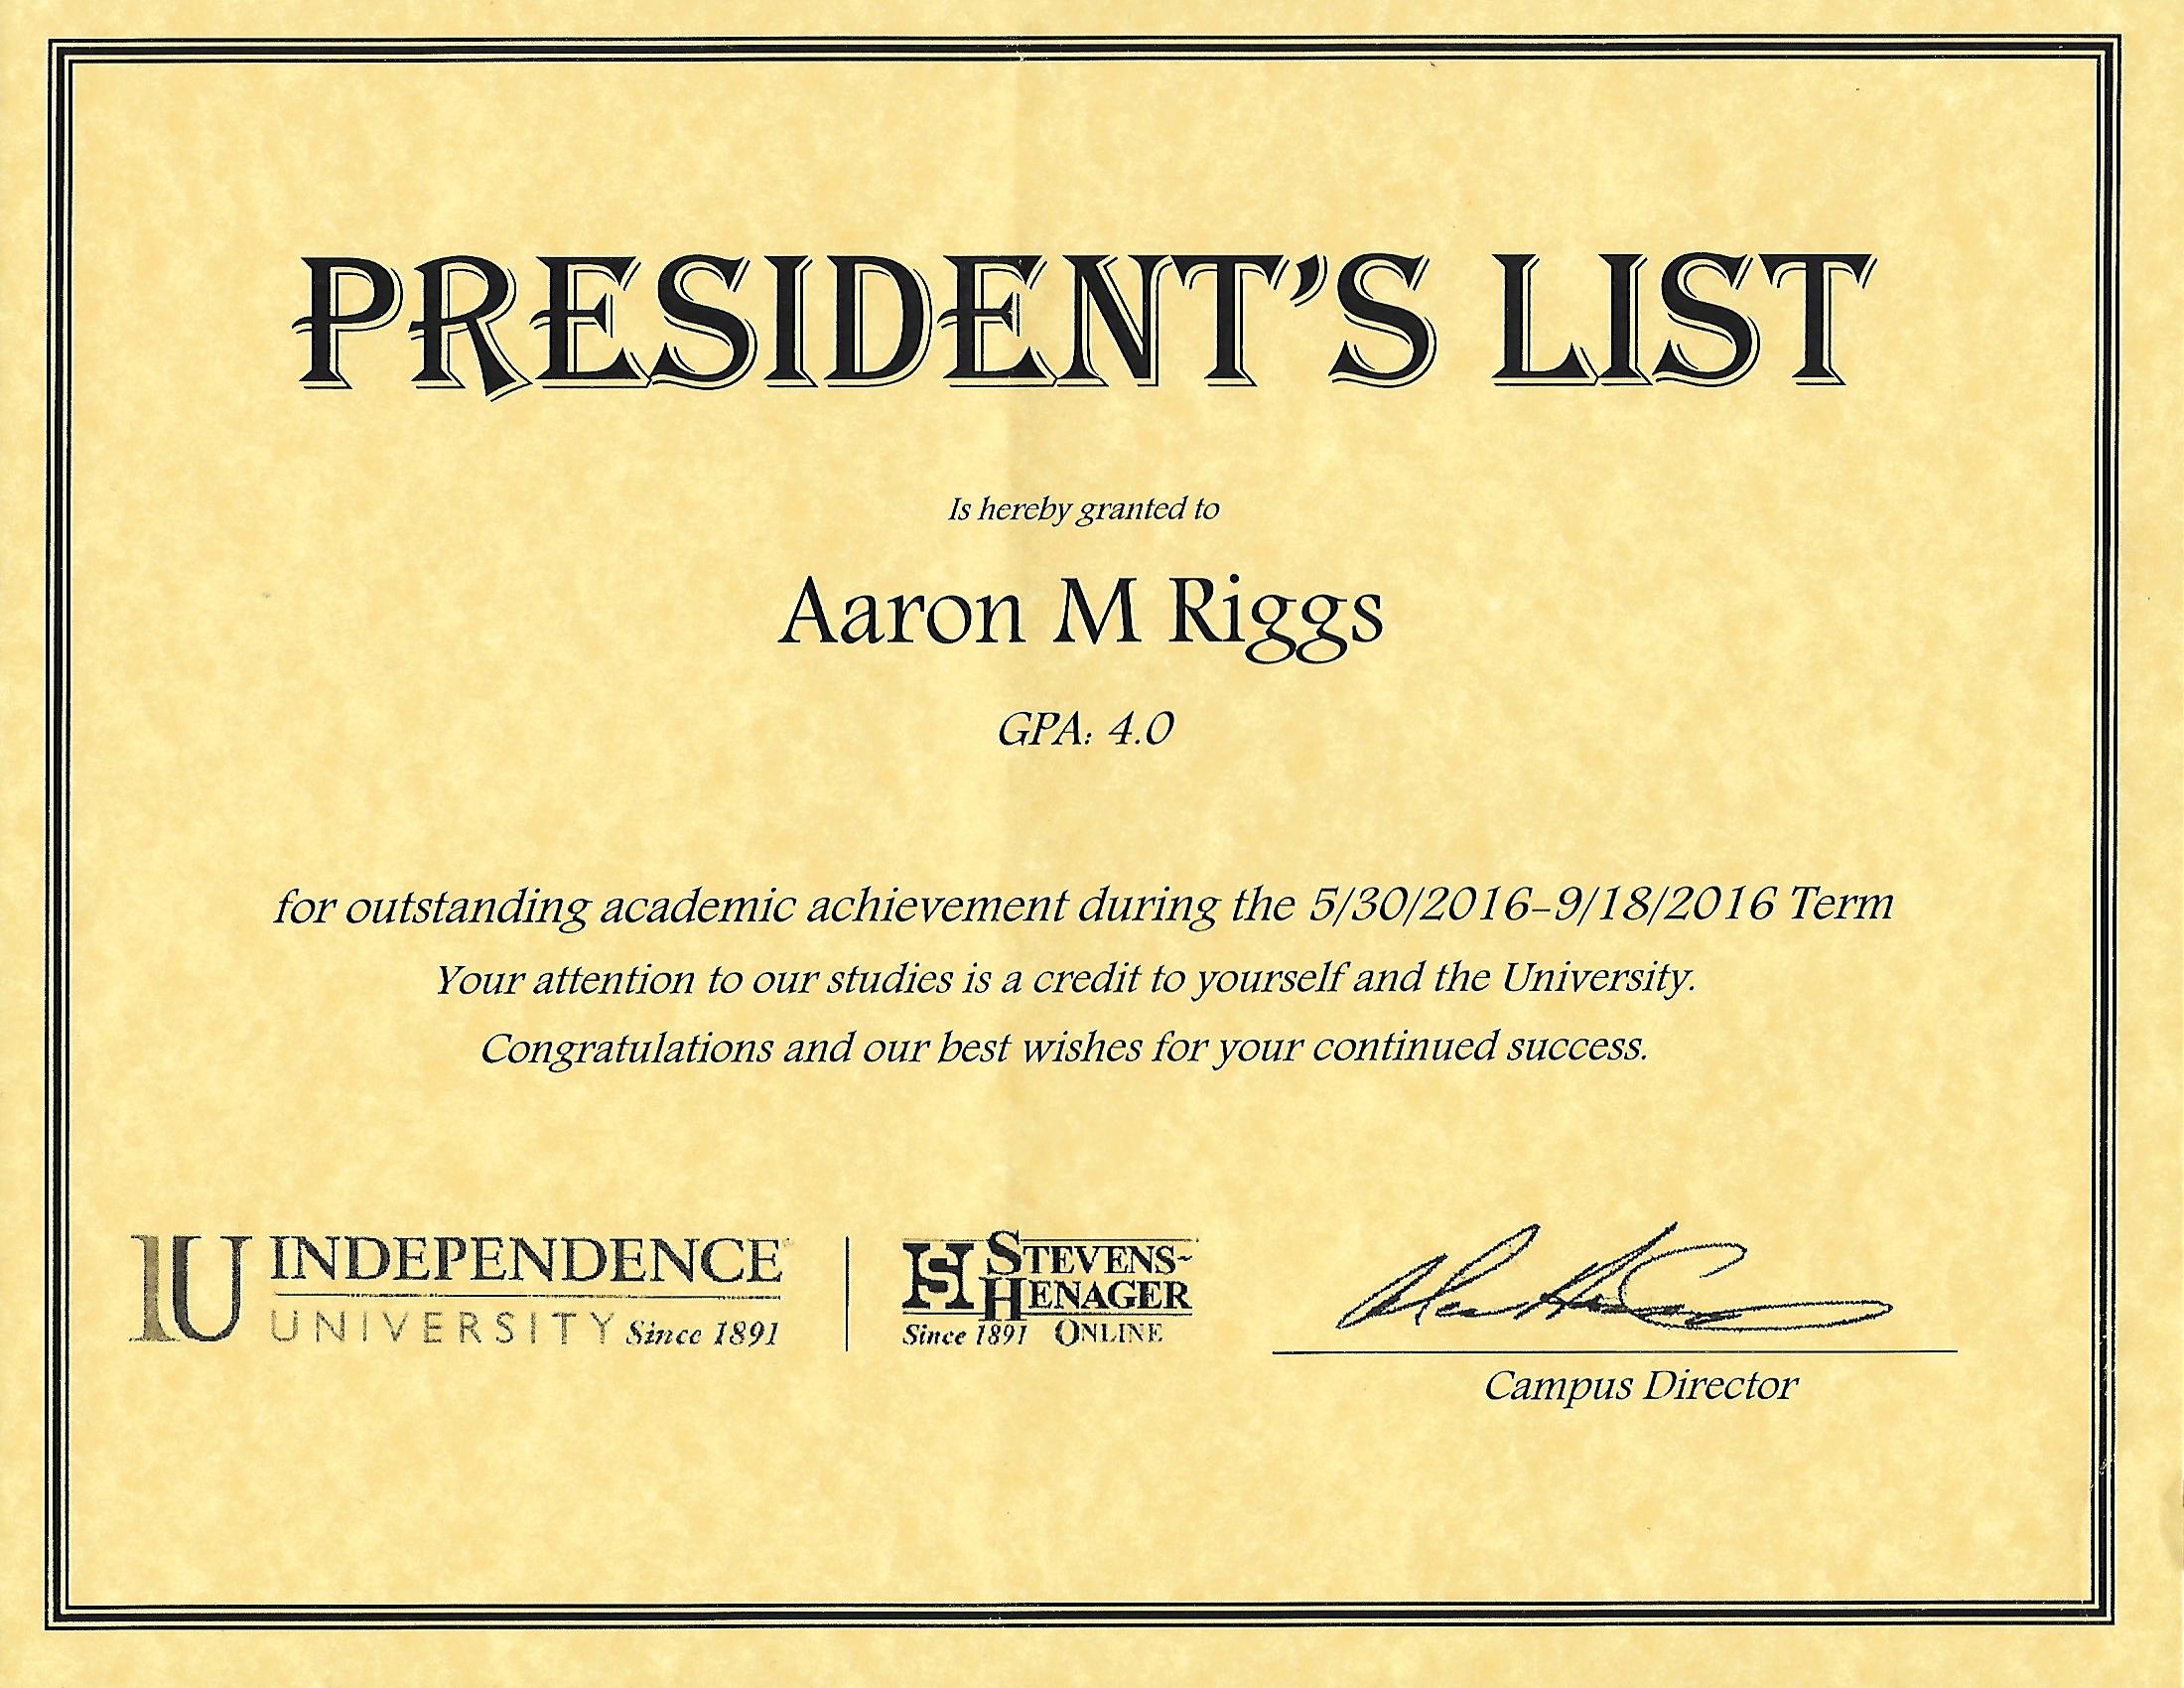 Presidents List Award